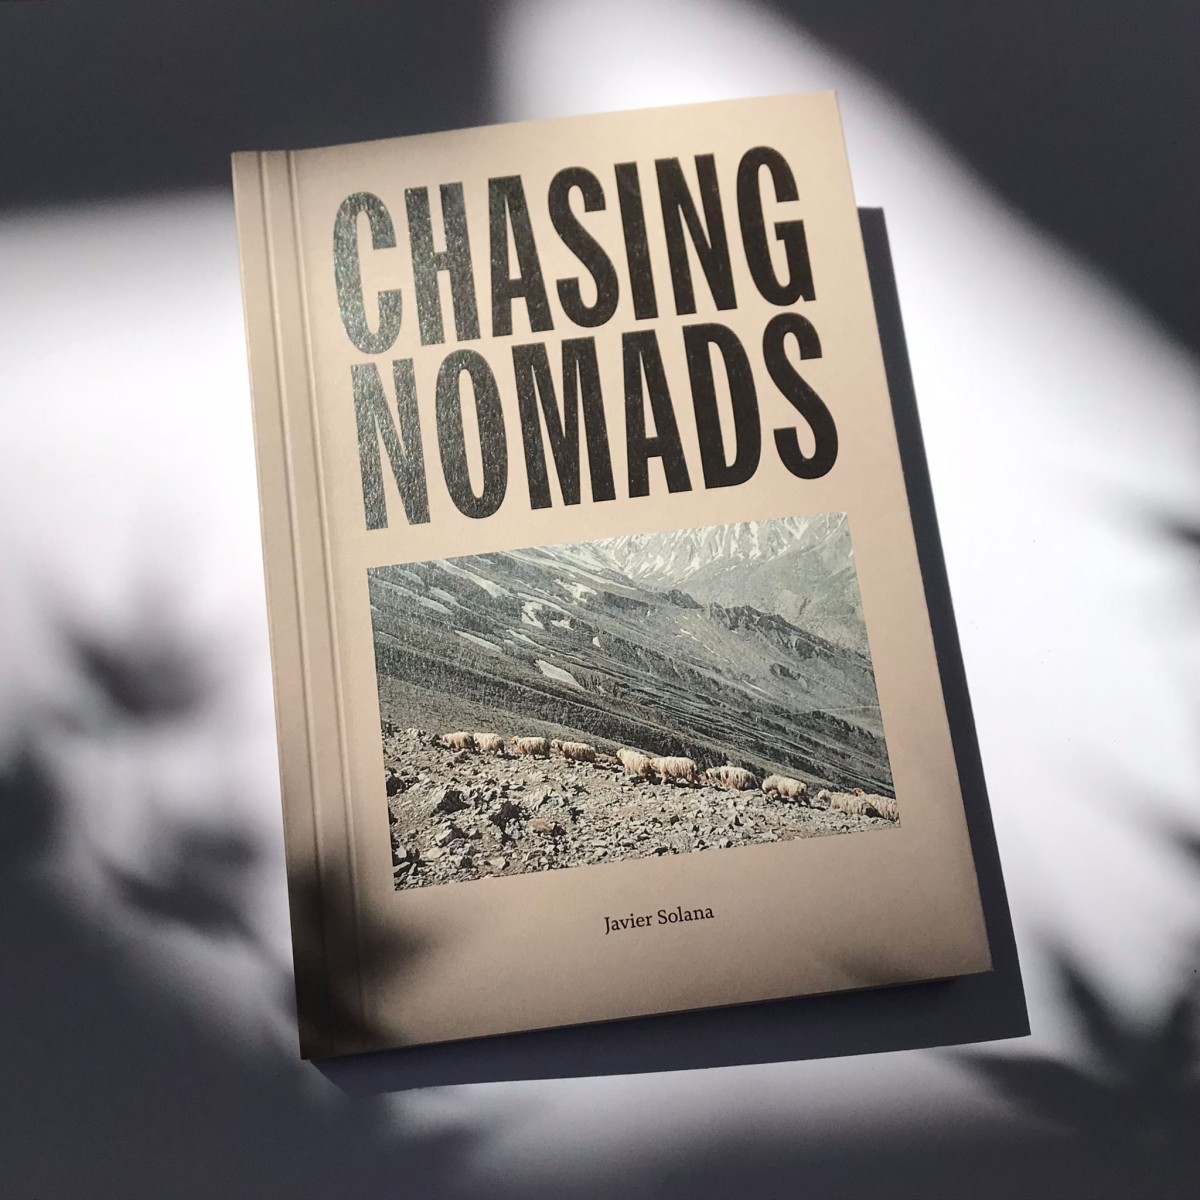 Chasing nomads - Javier Solana